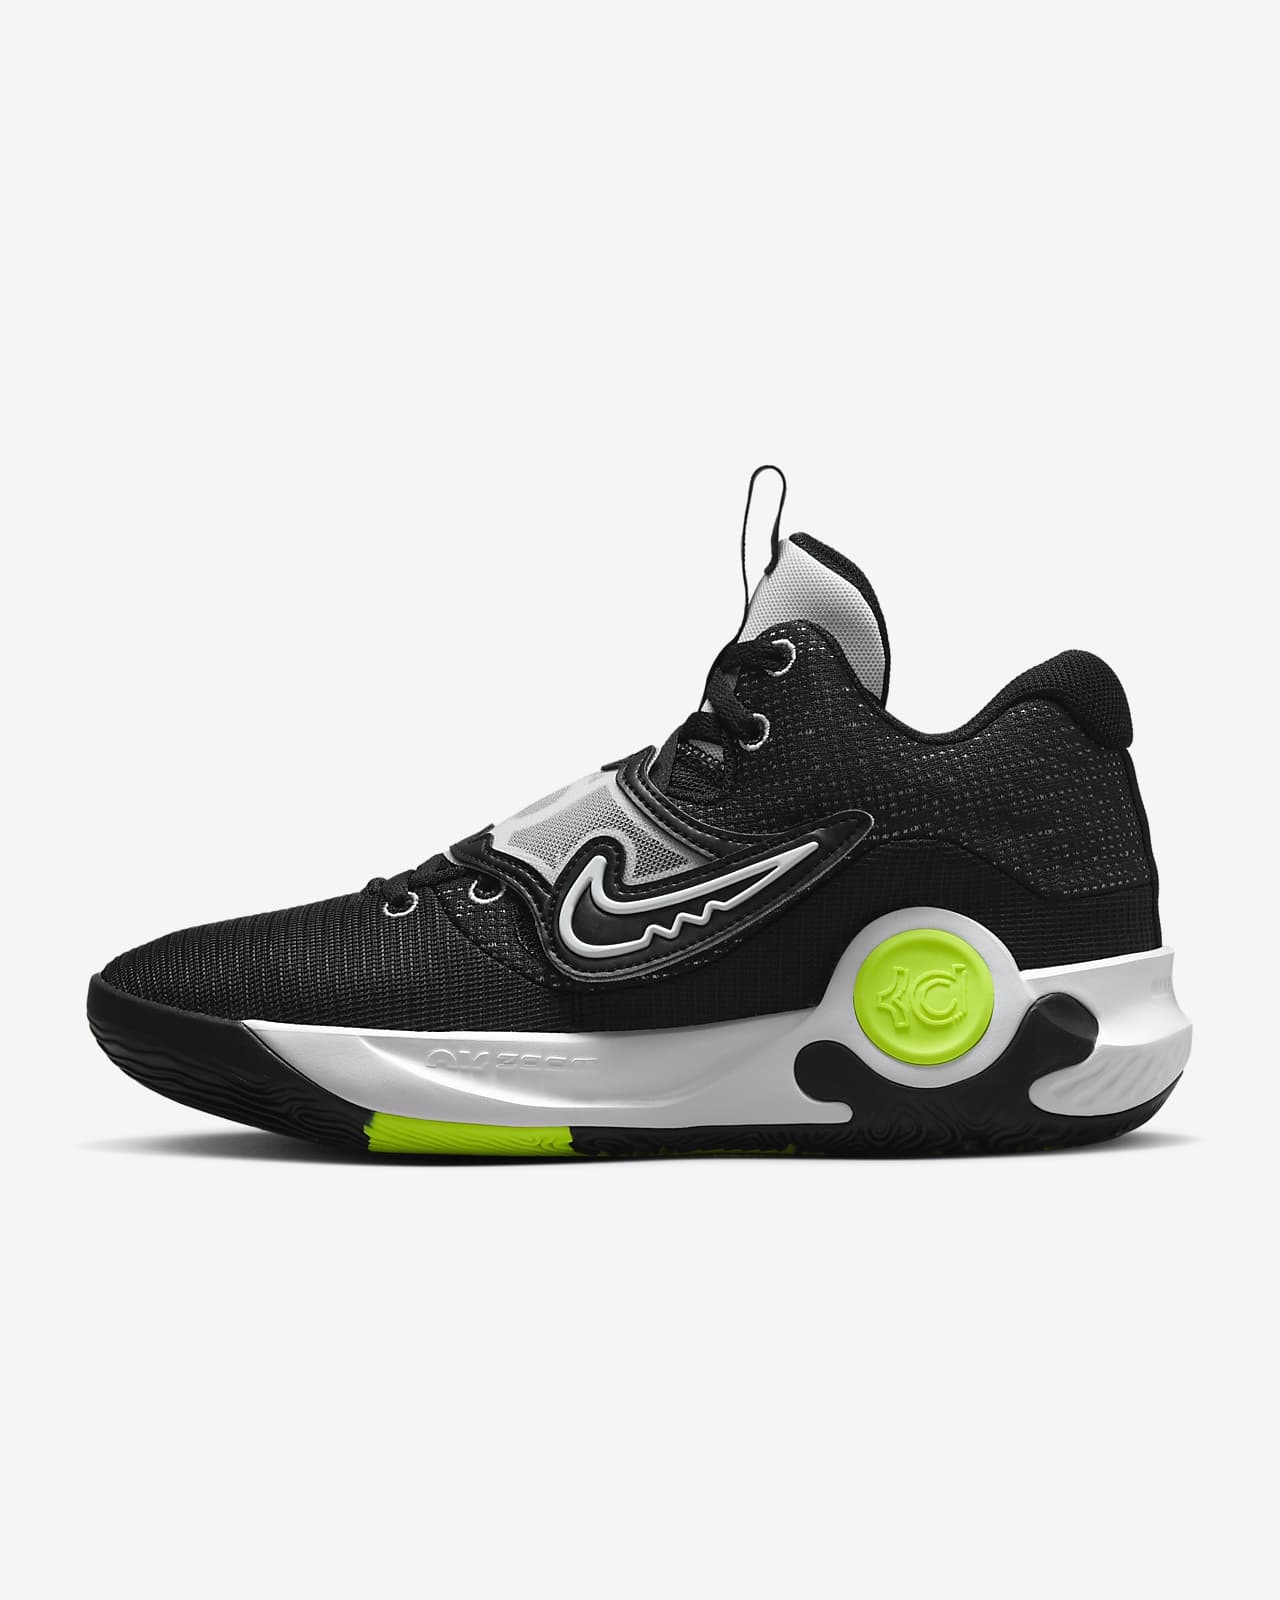 KD Trey 5 kd trey 5 low X Basketball Shoes. Nike.com